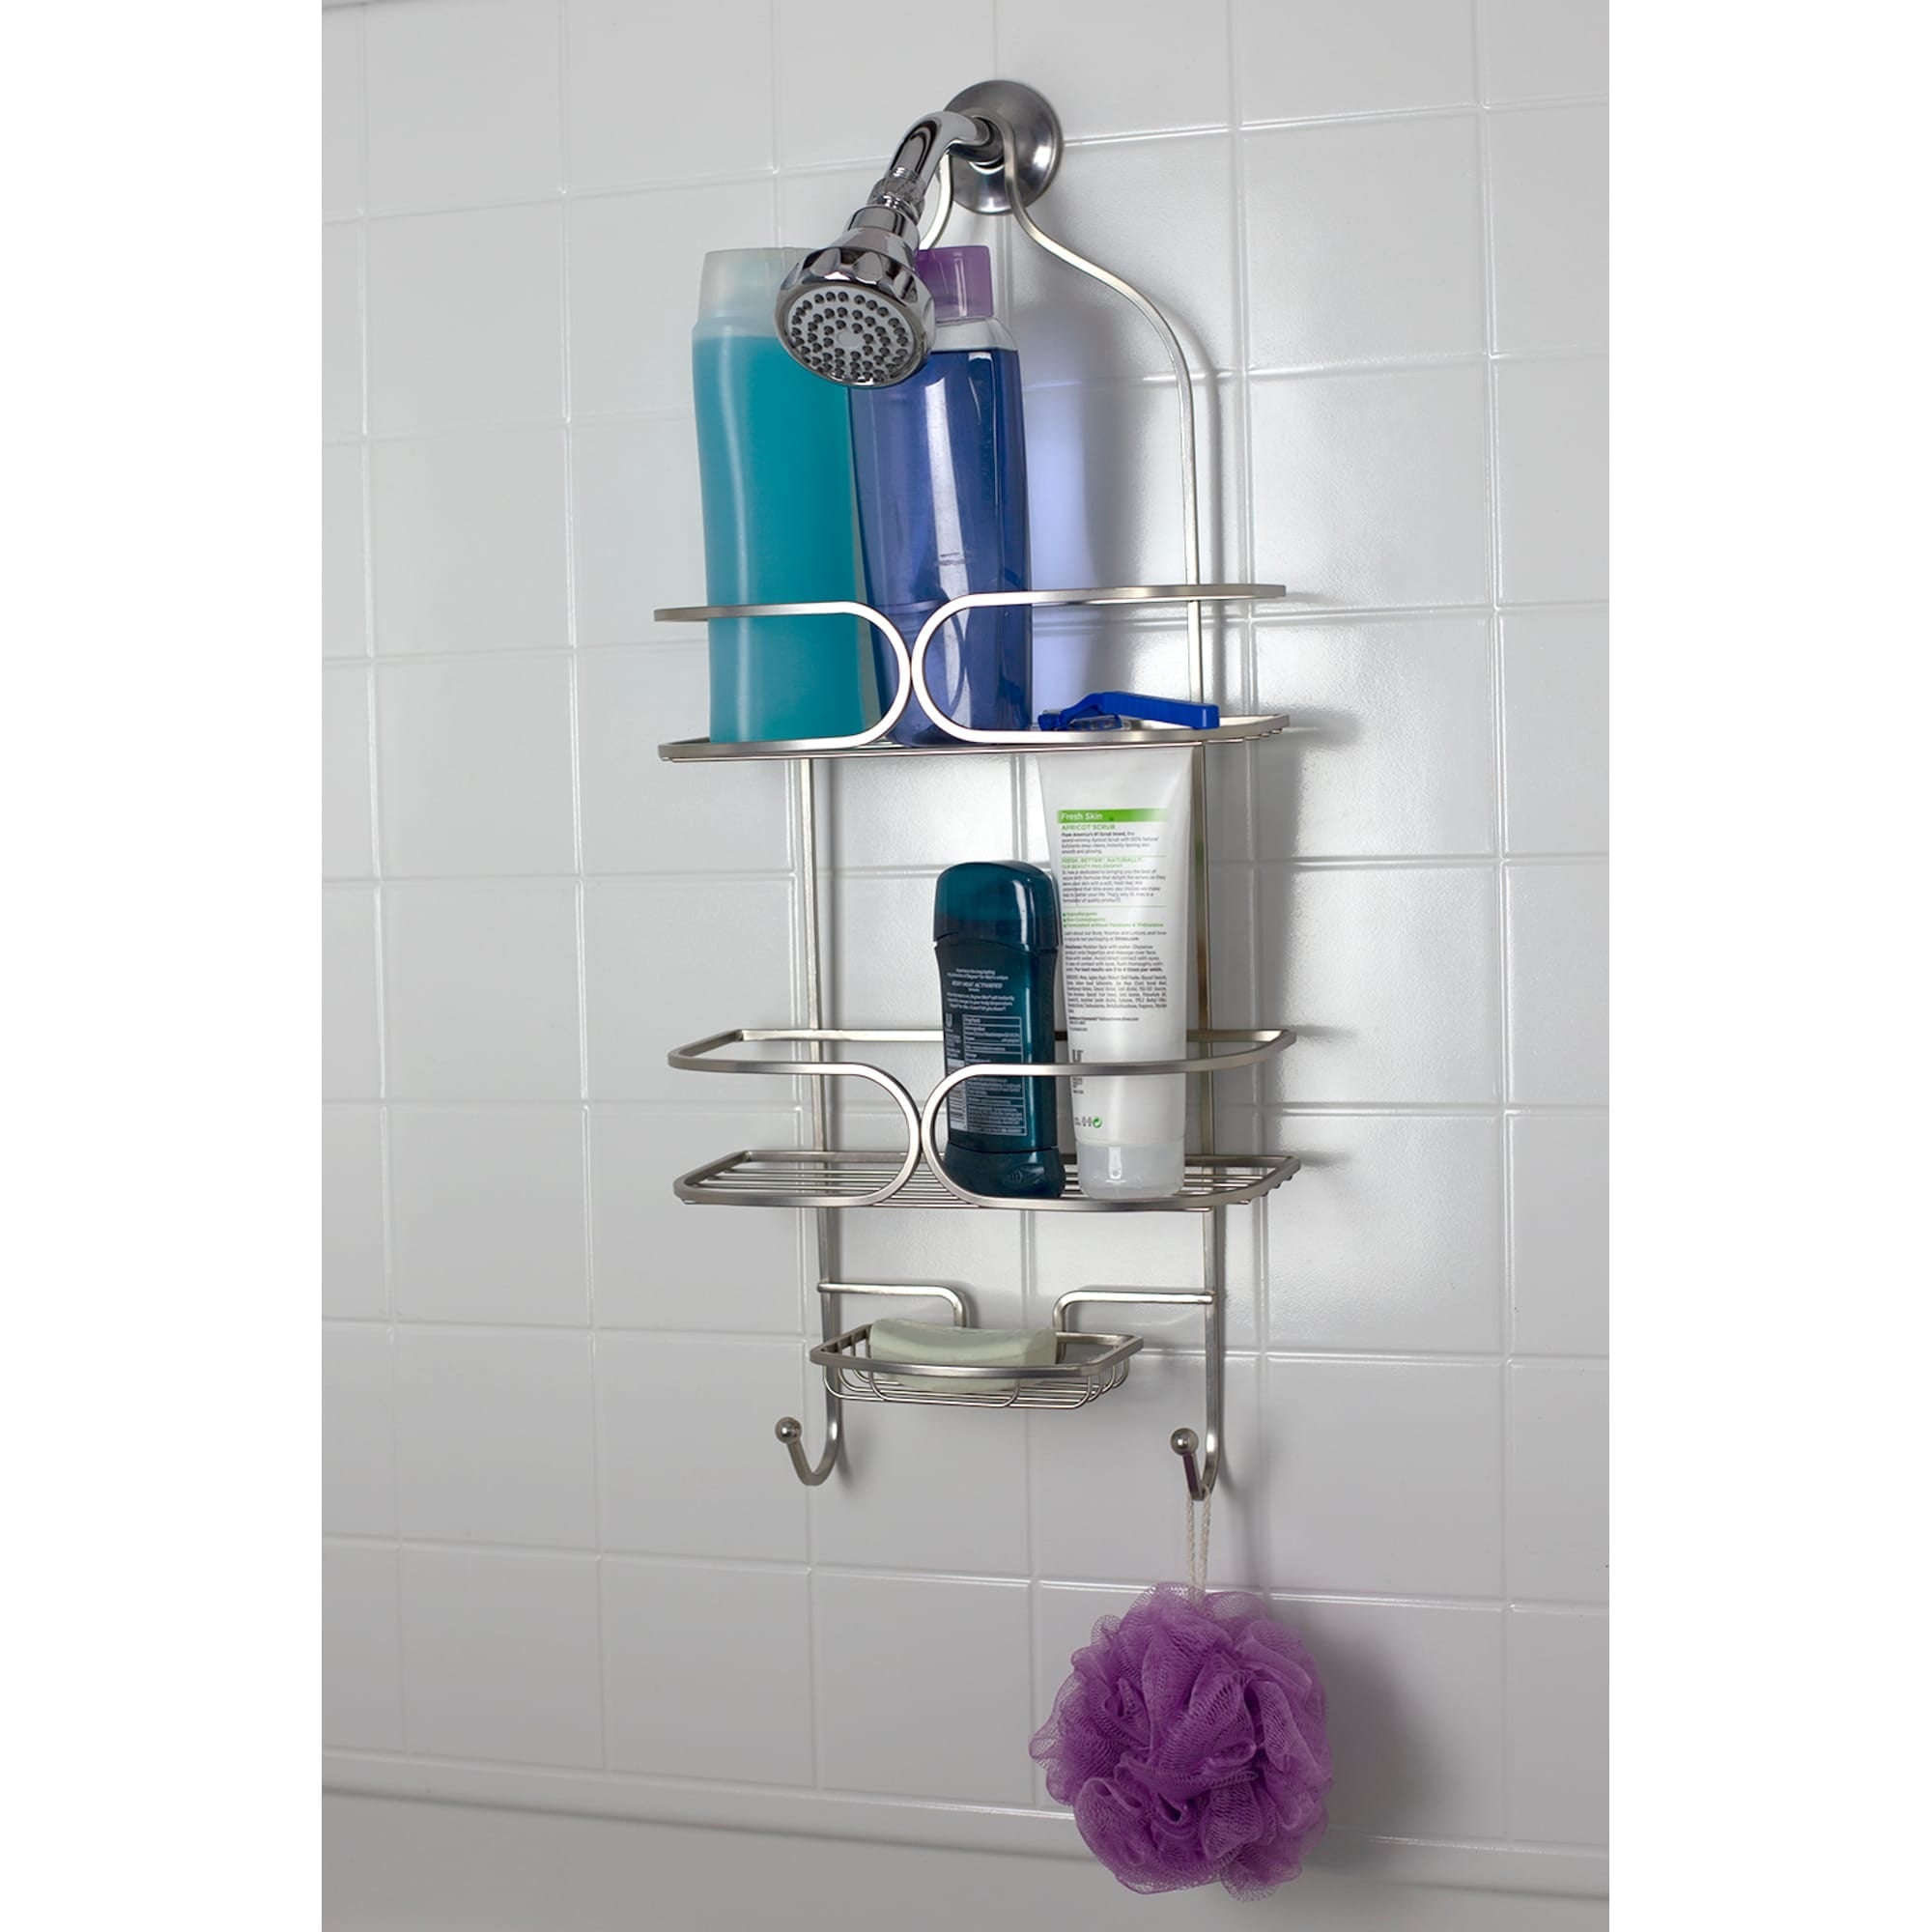 Home Basics Element Shower Caddy, Satin Nickel, SHOWER